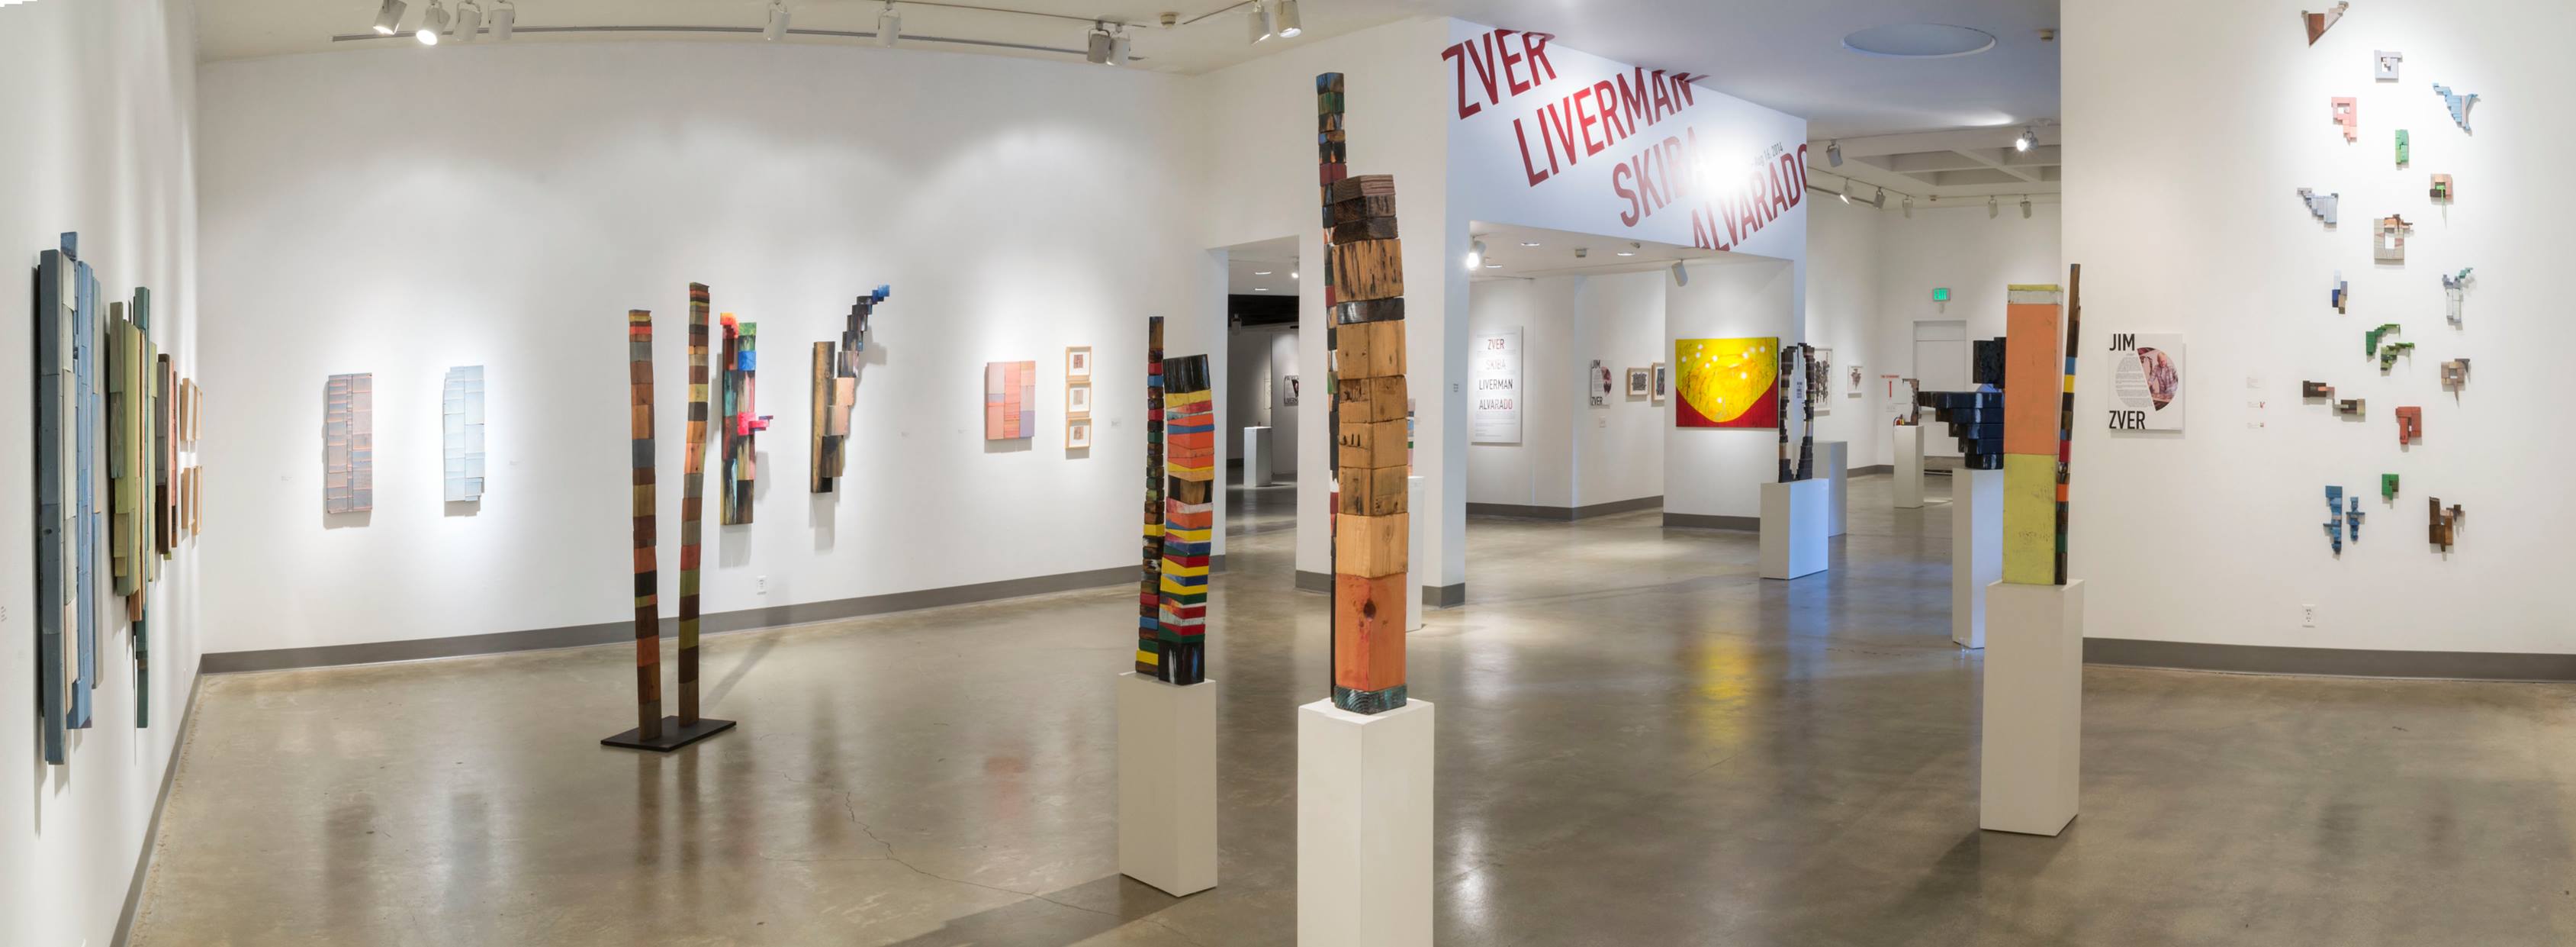 Installation View, Front East Wall, Francisco Alvarado, Patricia Liverman, Karin Skiba & Jim Zver Exhibition, July 7, 2014 to August 16, 2014